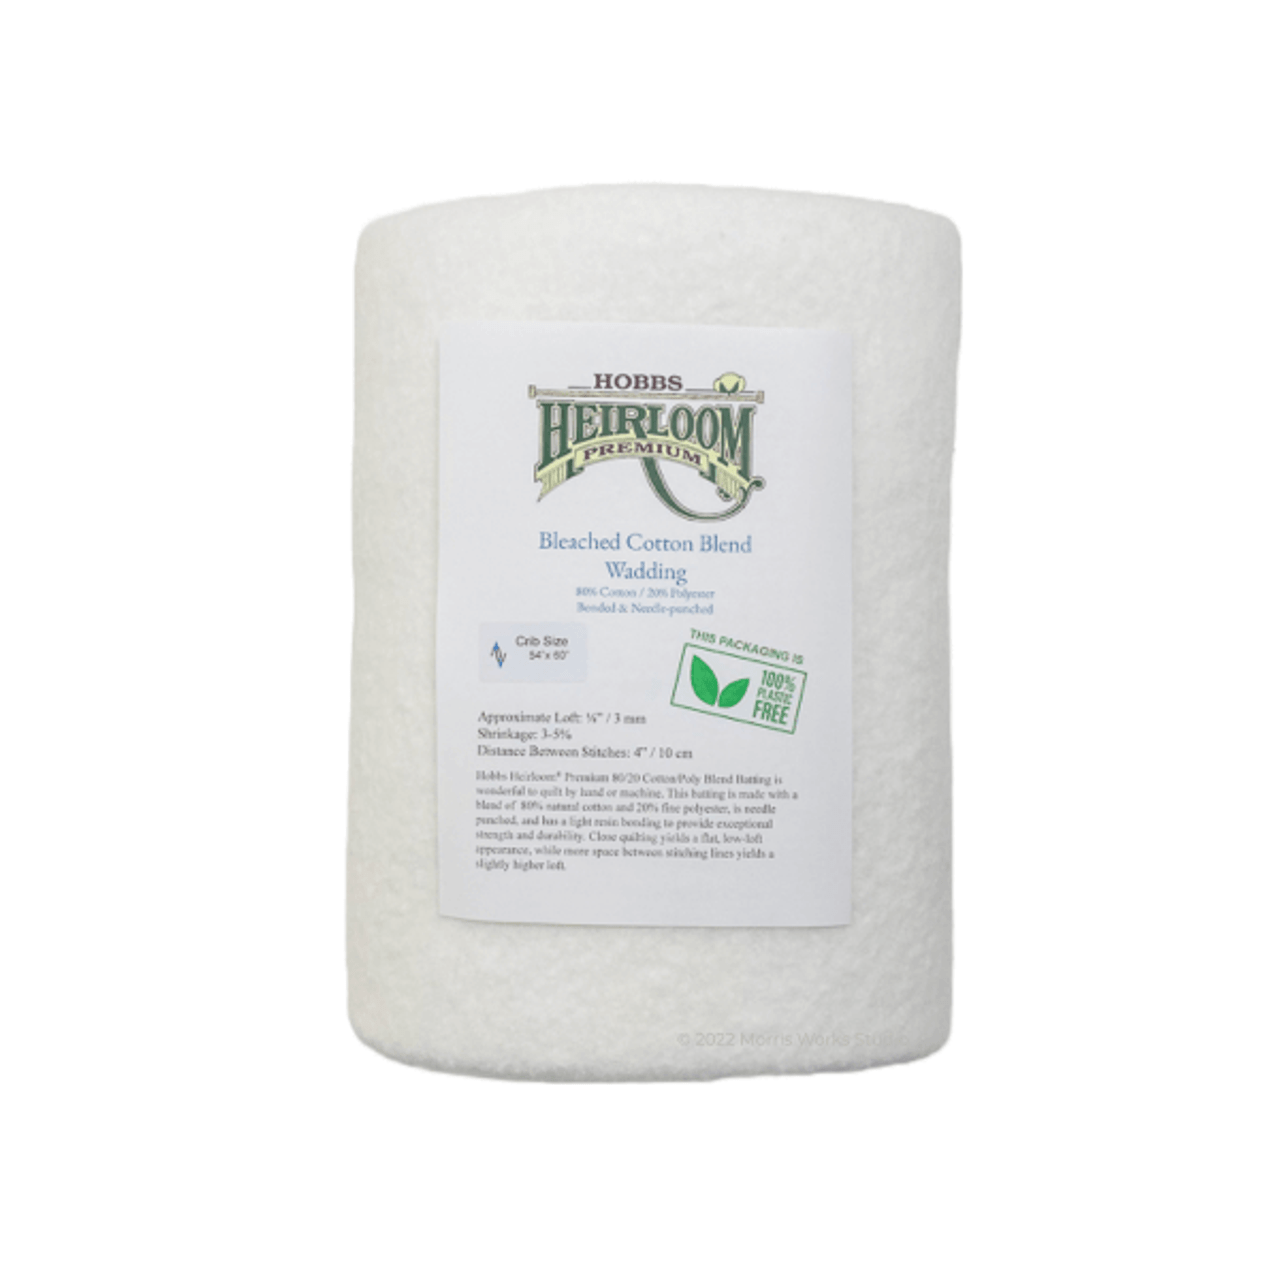 Heirloom Premium 80/20 White Cotton Wadding - Large Crib Size Pre cut pack